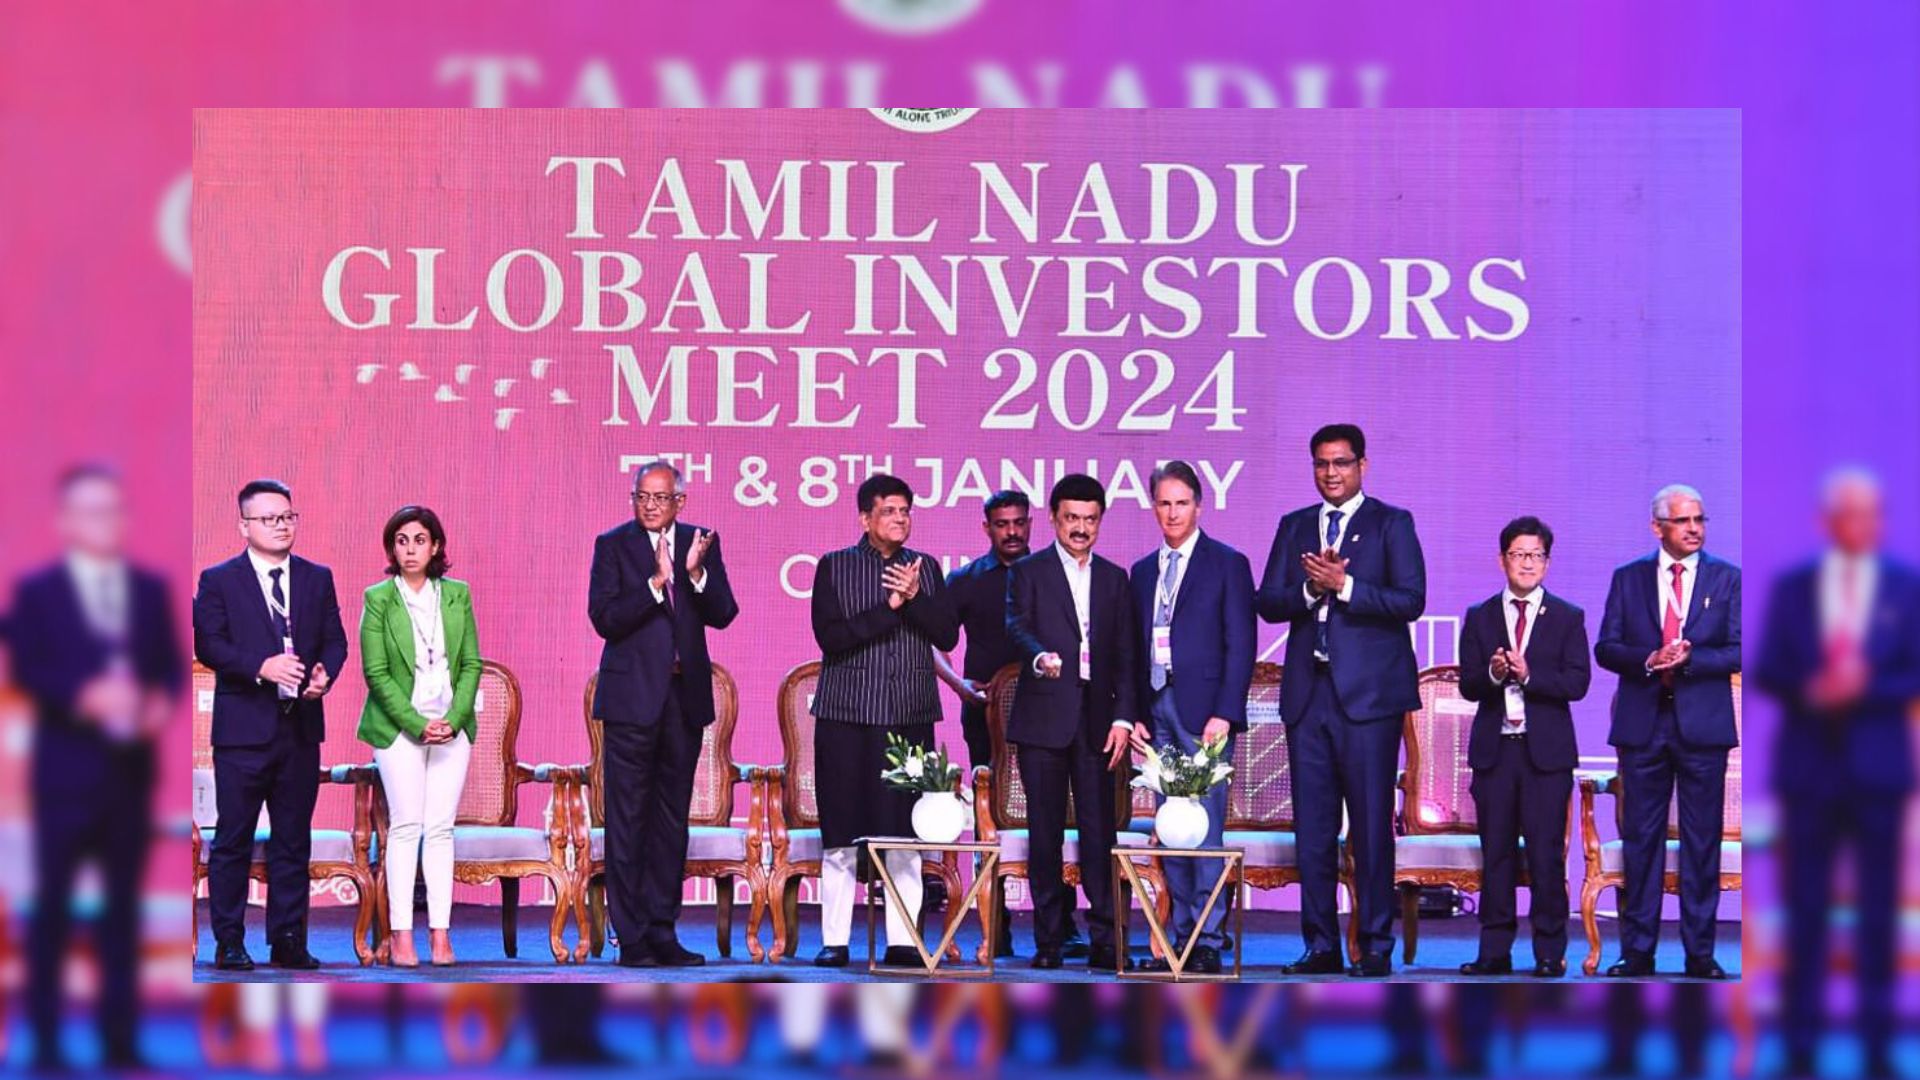 Tamil Nadu Global Investors Meet 2024 Aims for $1 Trillion Economy